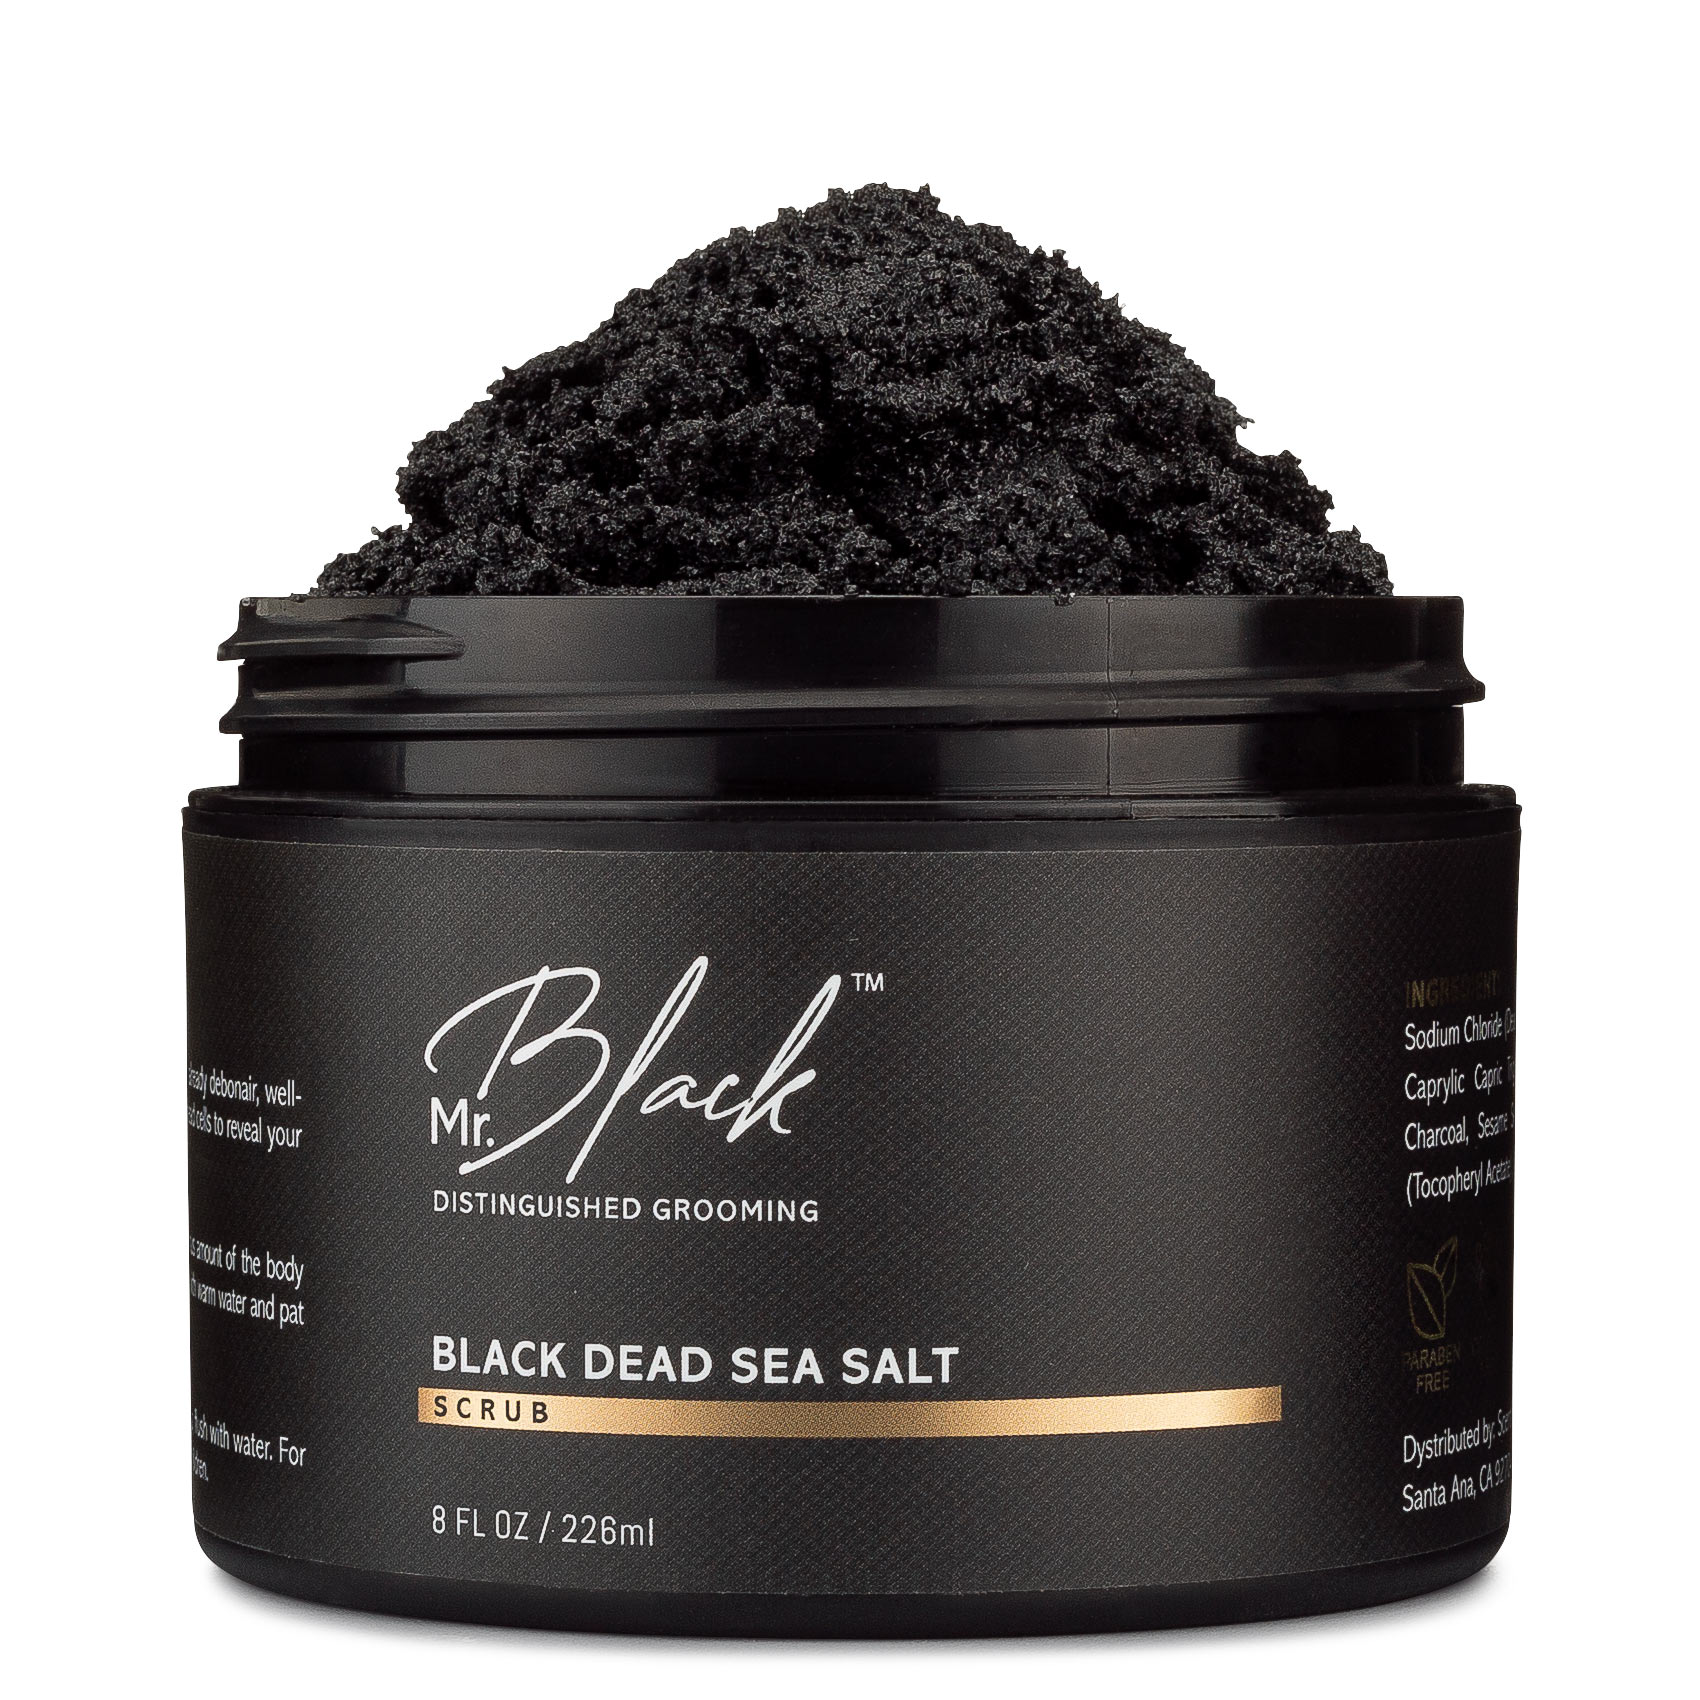 Black-Dead-Sea-Salt-Scrub-Mr.-Black